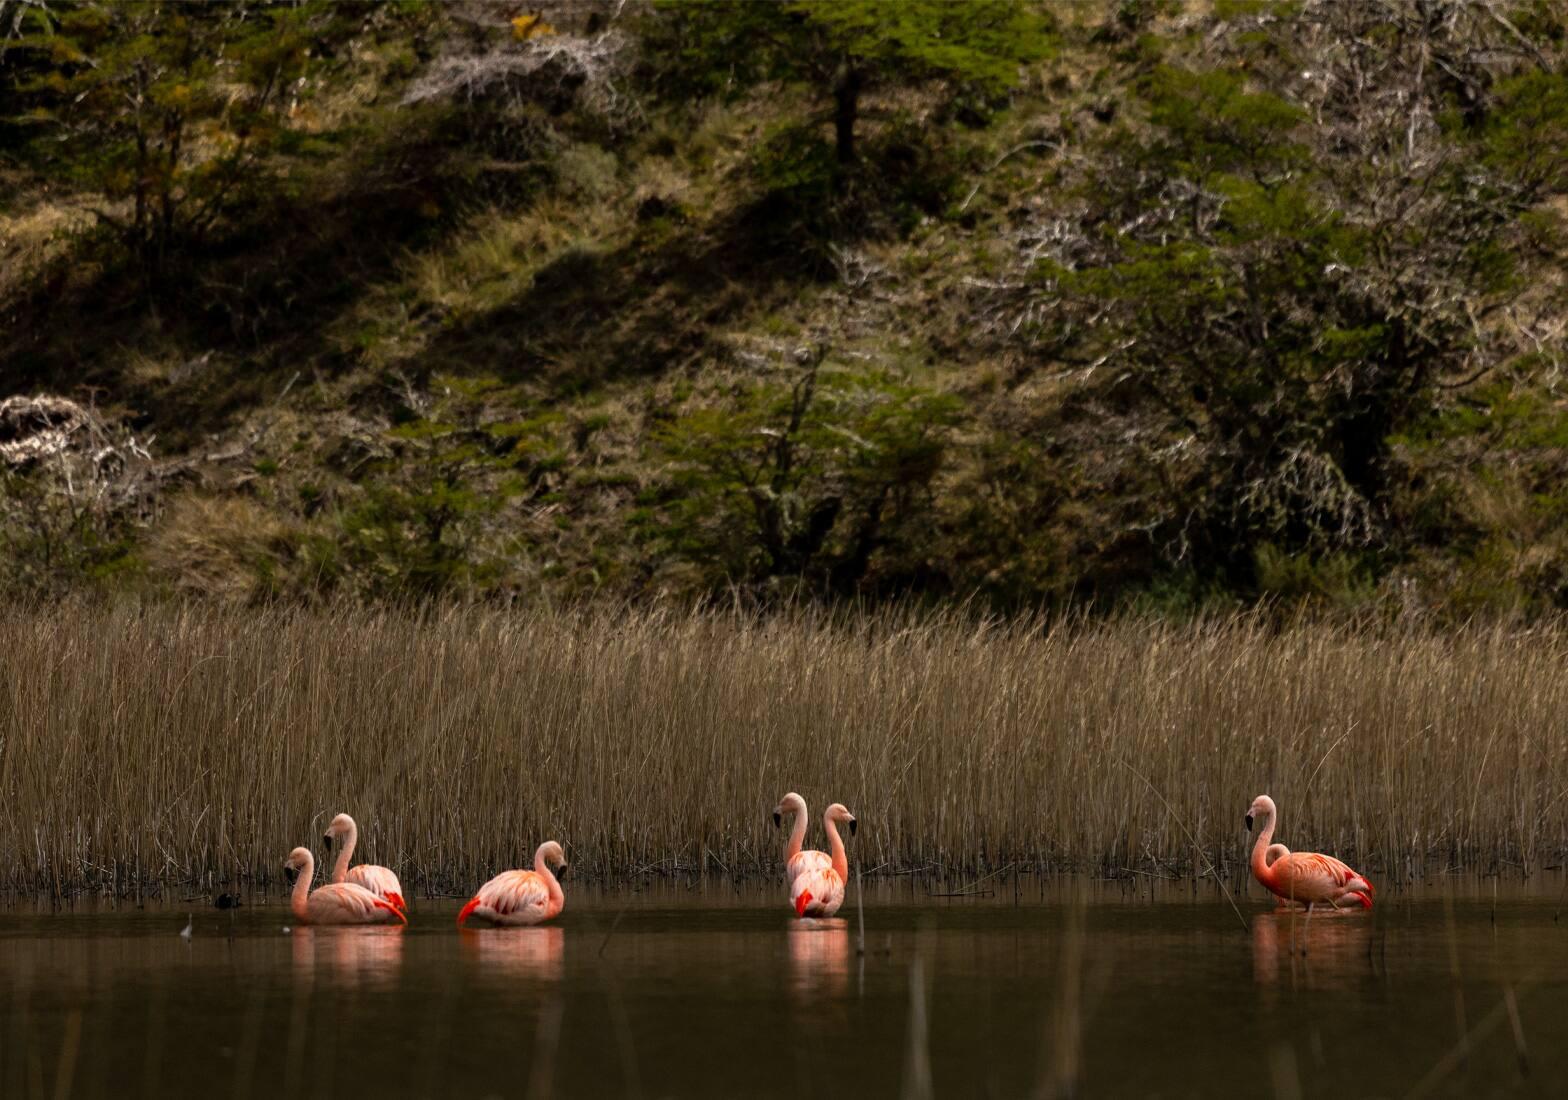 Flamingos in Patagonia National Park, Chili.
© Rolex/Sofía López Mañan